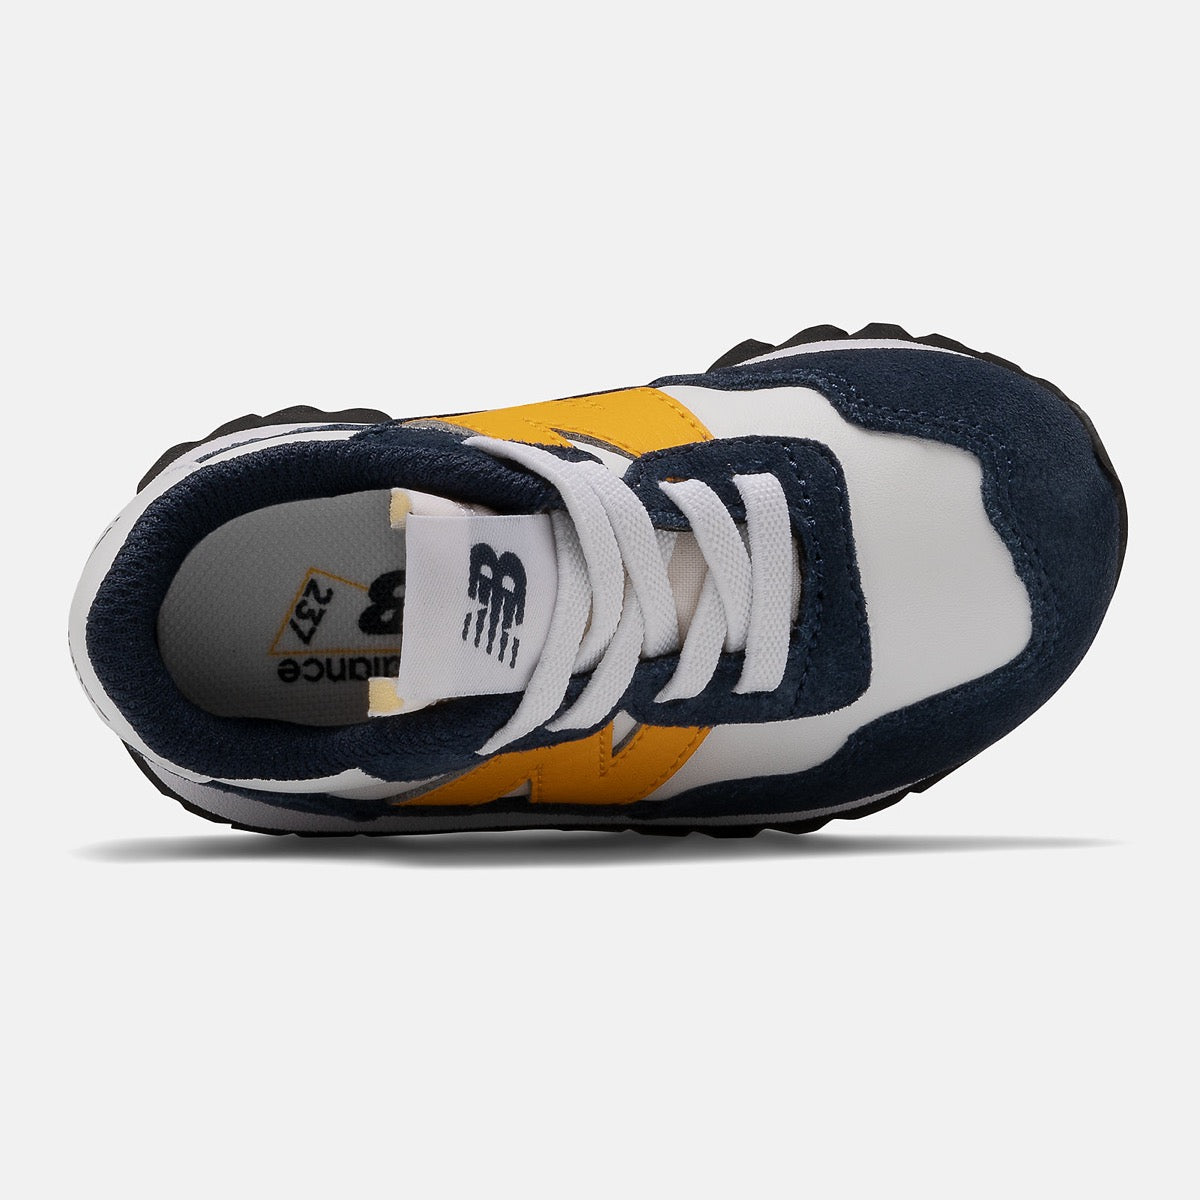 Scarpe Bambino NEW BALANCE Sneakers 237 in Pelle colore Navy con Kumquat